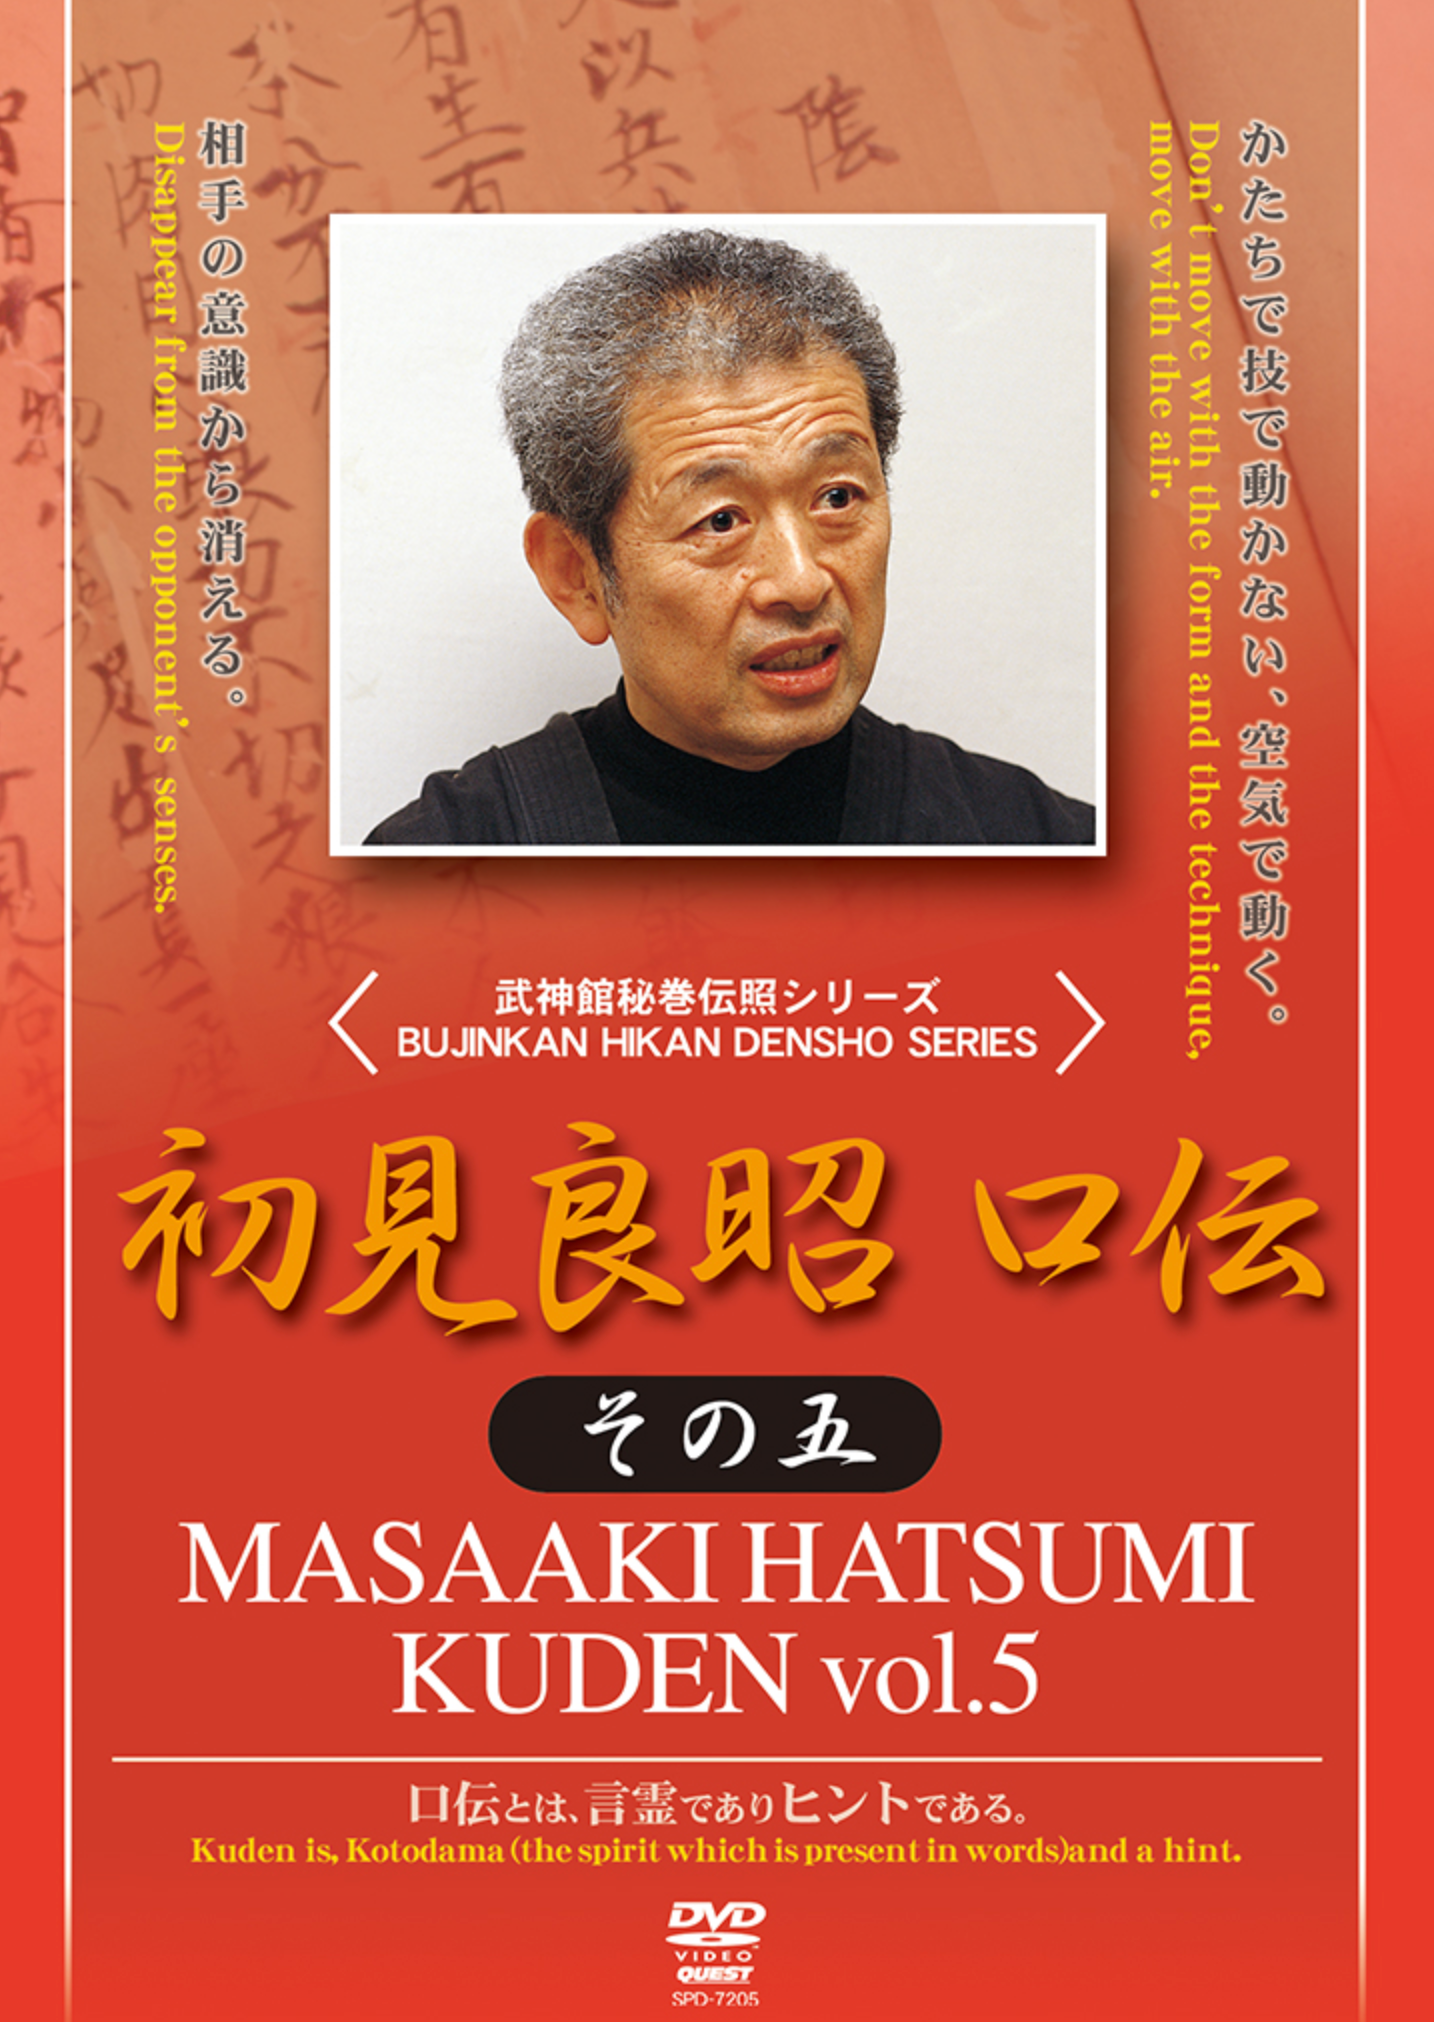 Kuden Vol 5 DVD with Masaaki Hatsumi - Budovideos Inc